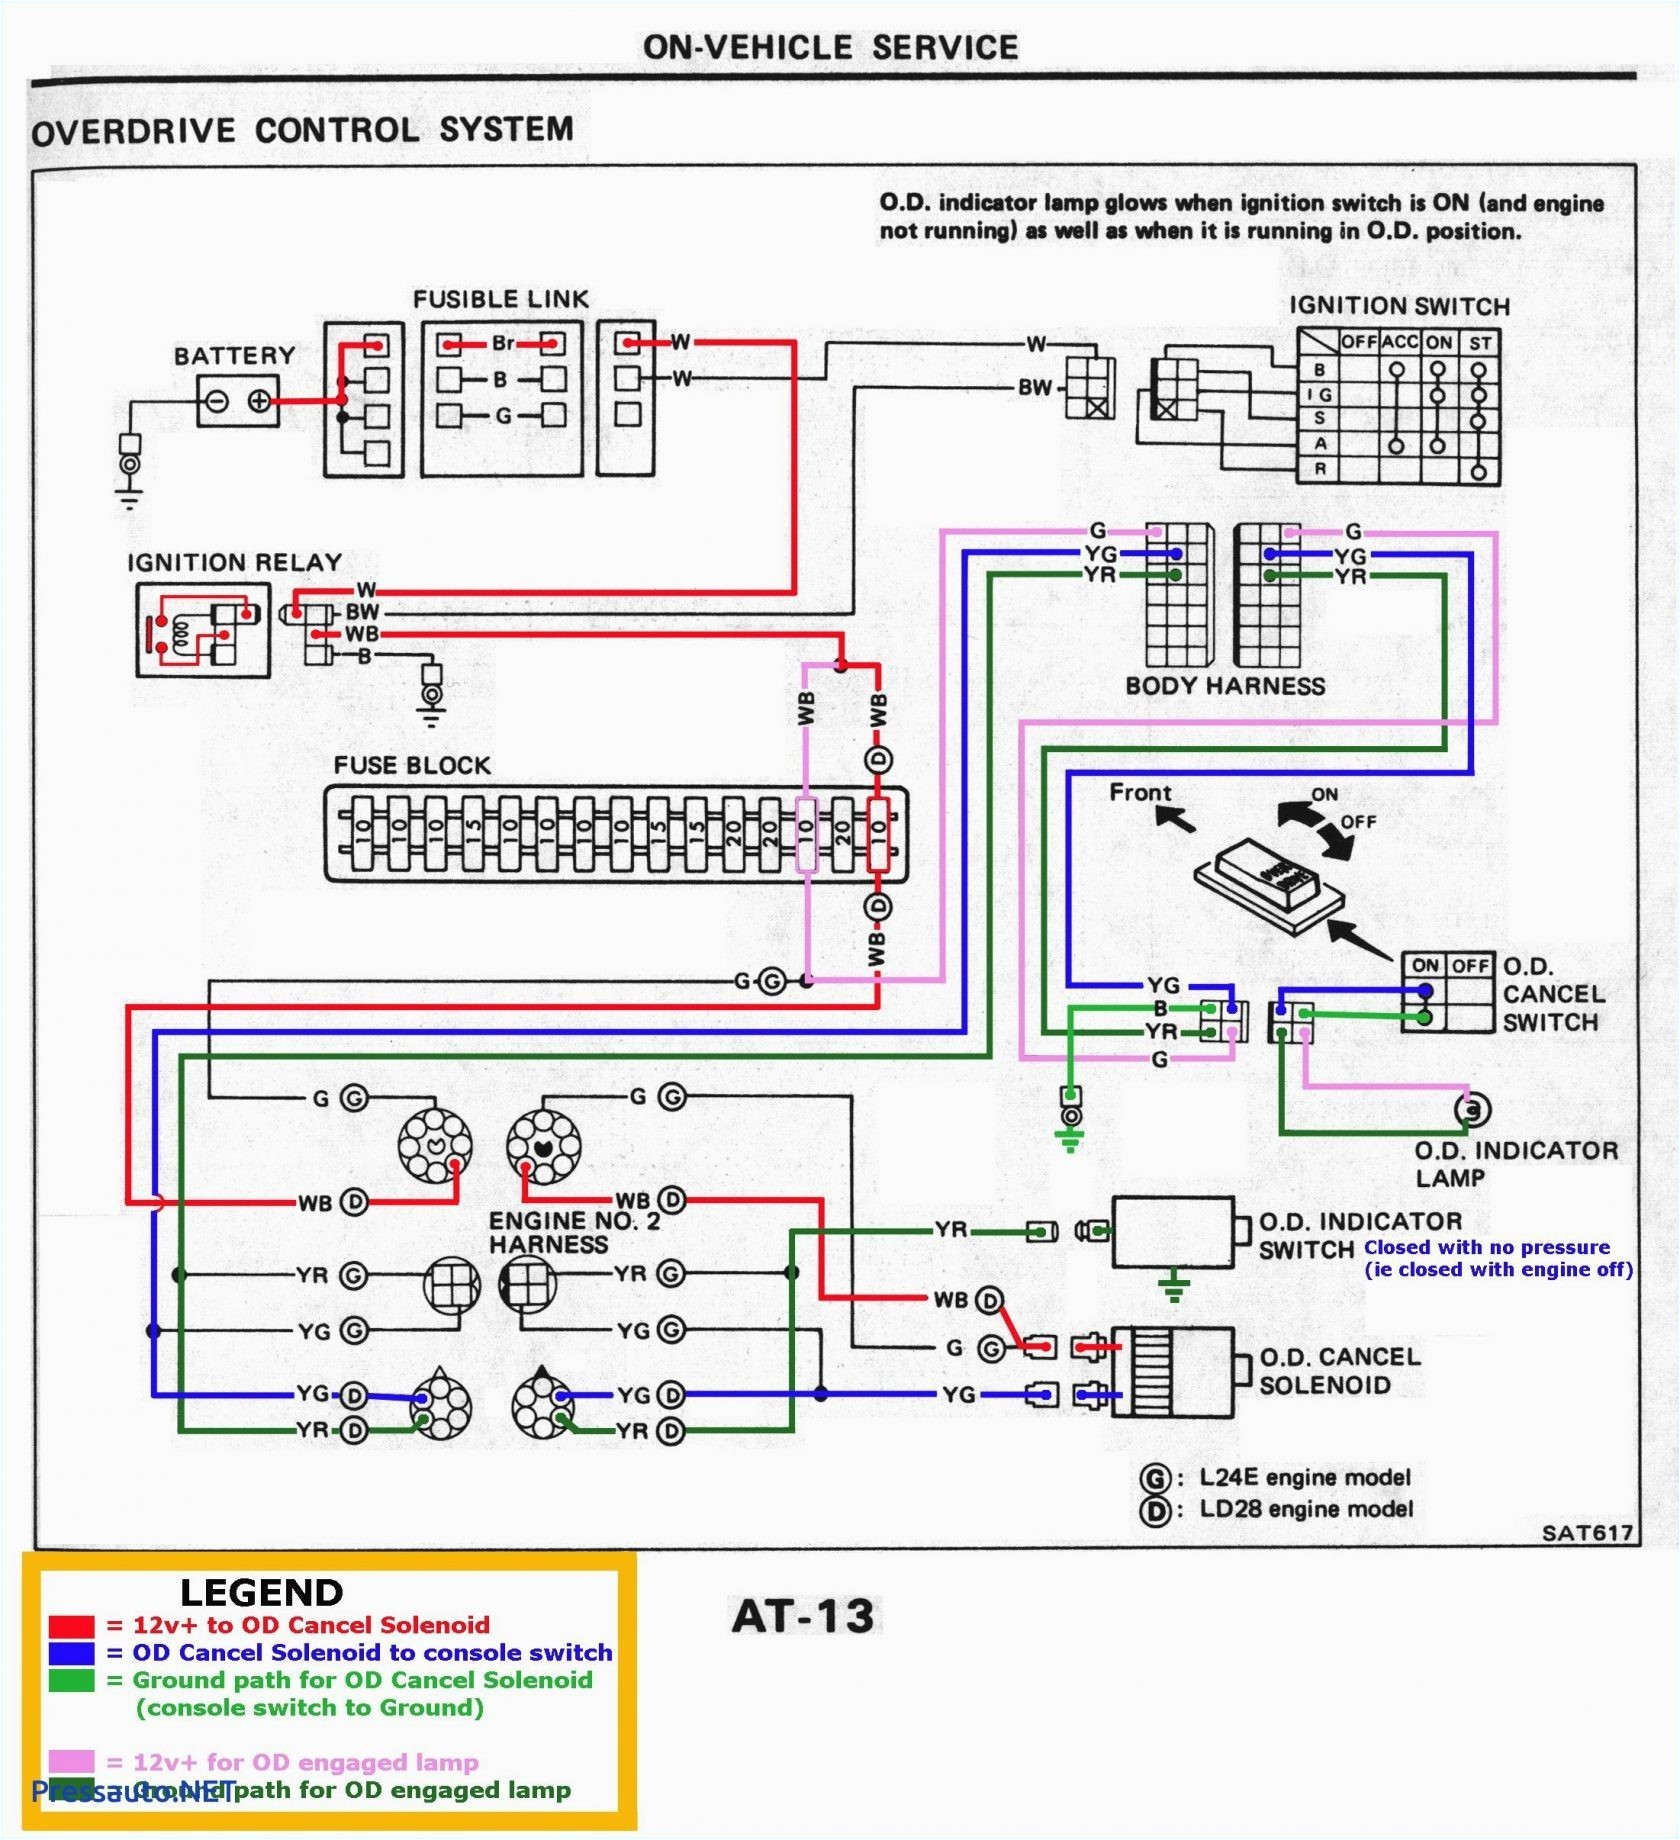 yama wiring diagram wiring diagramyama wiring diagram wiring diagrams valueyama wiring diagram wiring diagram show yama